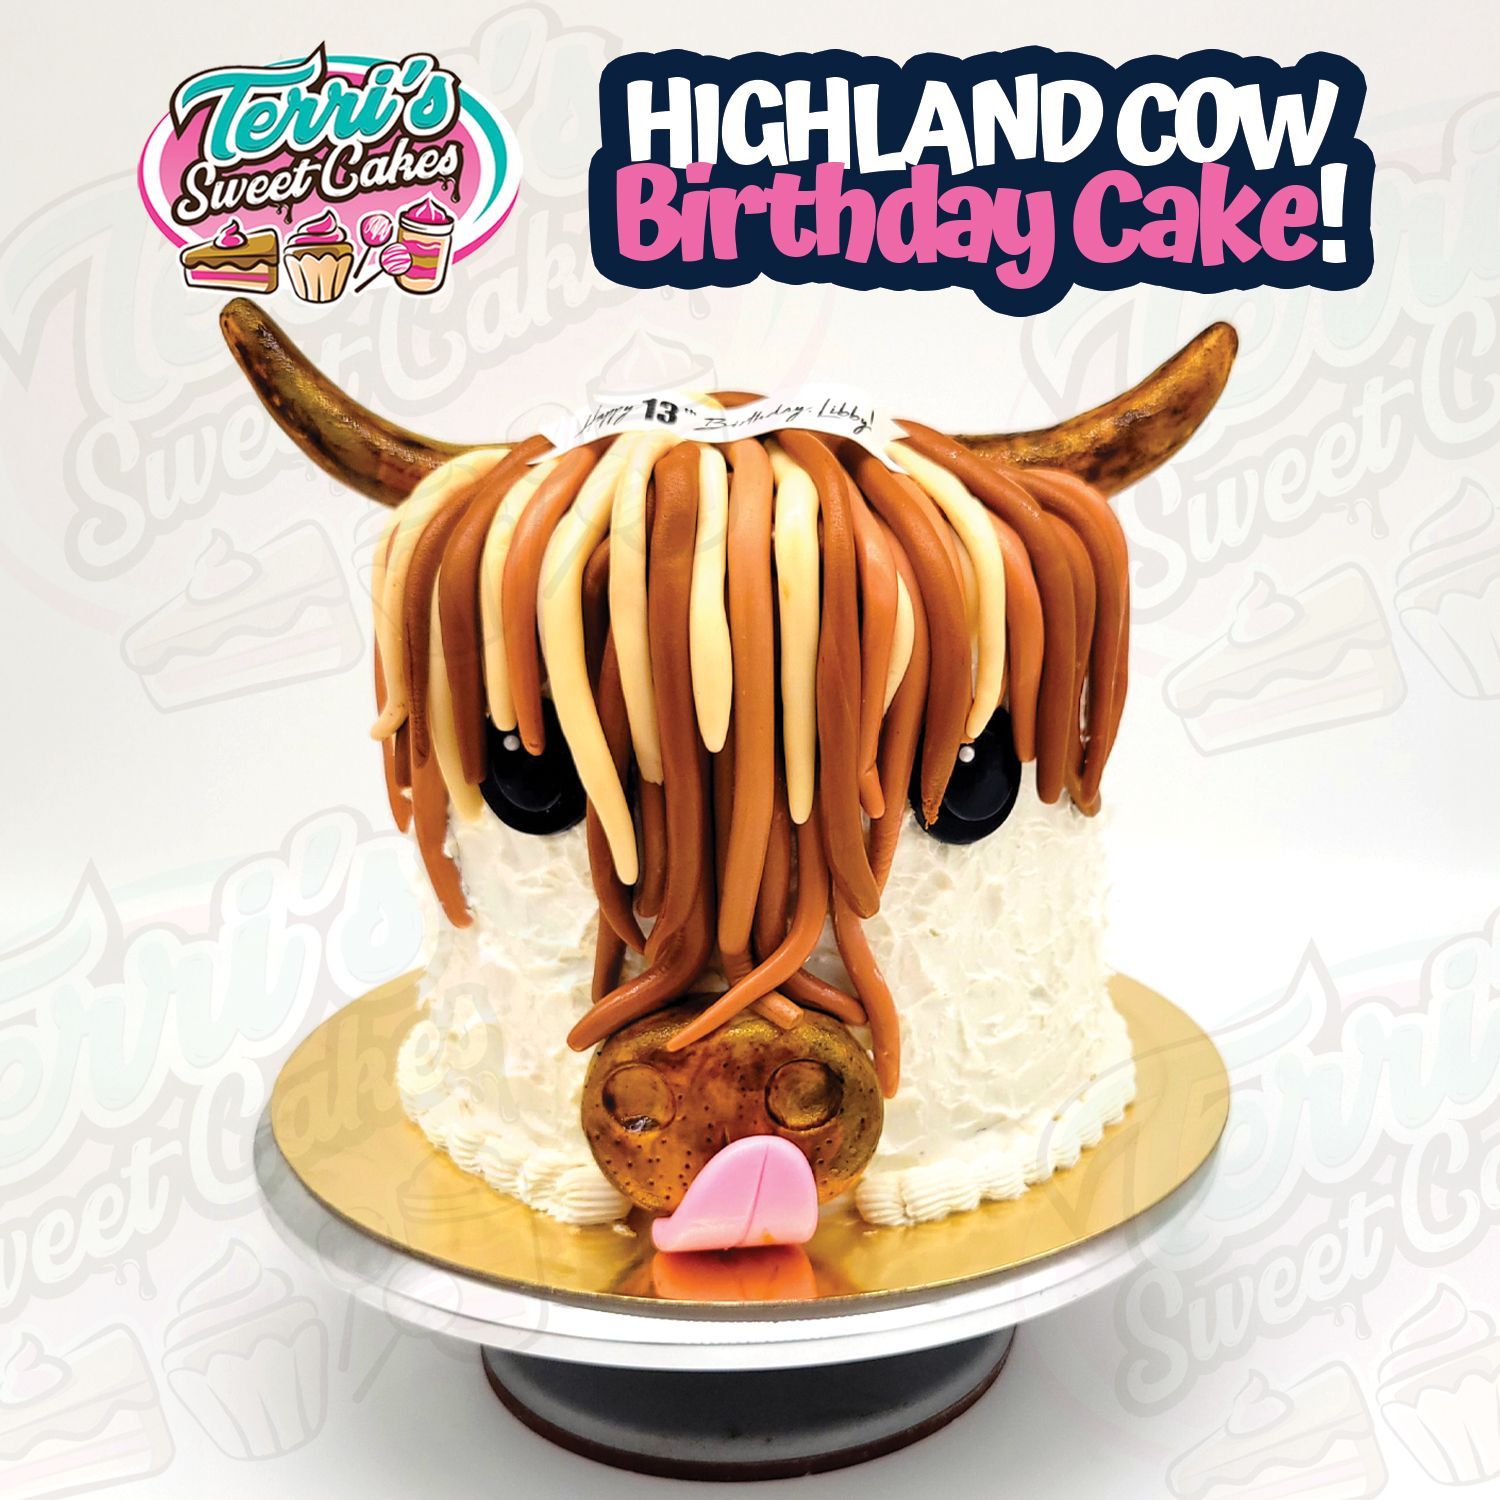 Highland Cow Birthday Cake by Terri's Sweet Cakes!